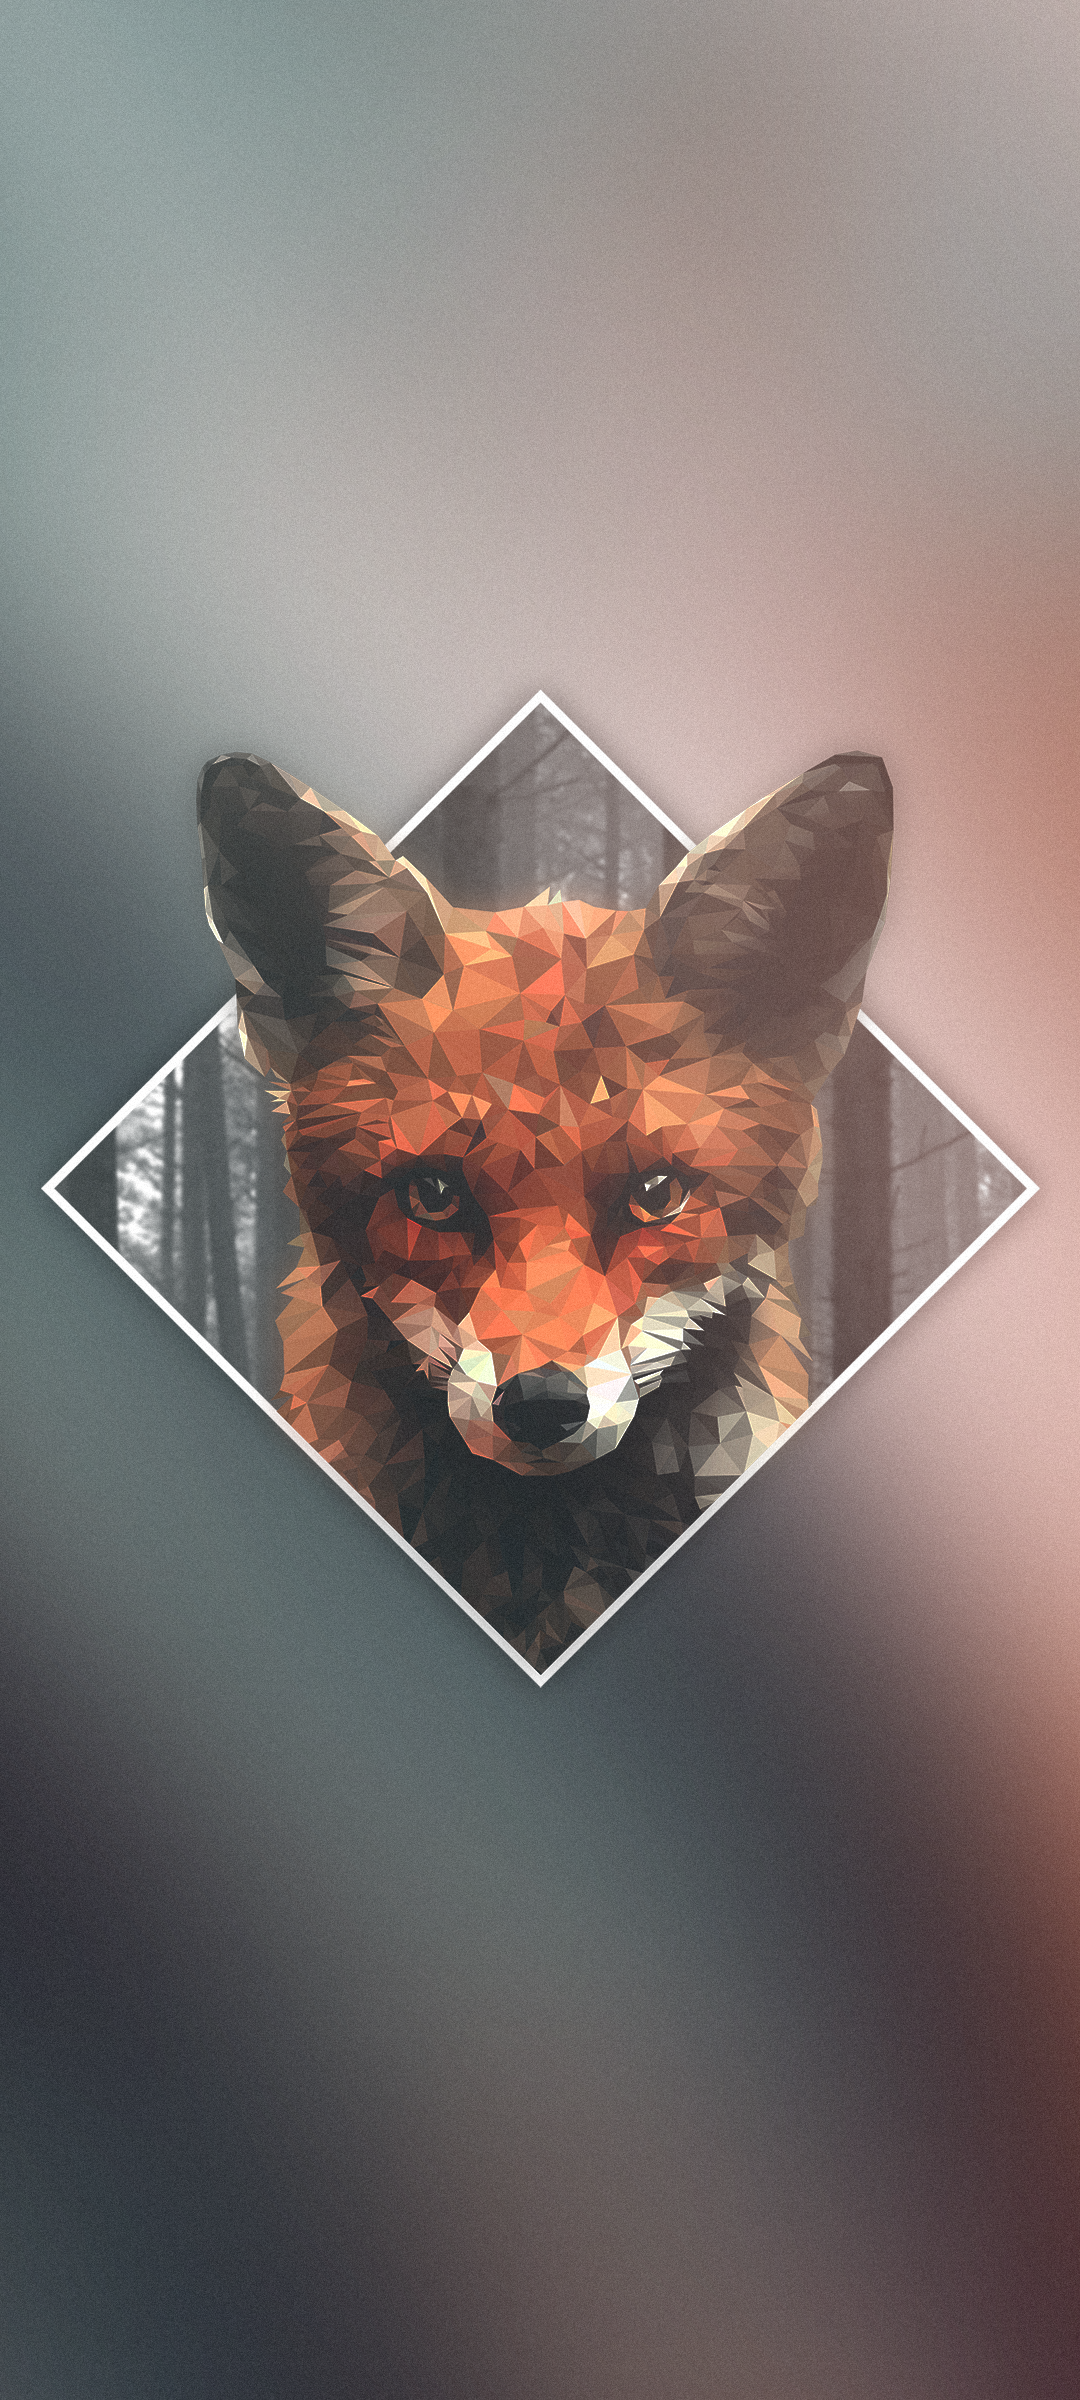 General 1080x2400 digital art low poly polygon art fox animals gradient simple background minimalism portrait display